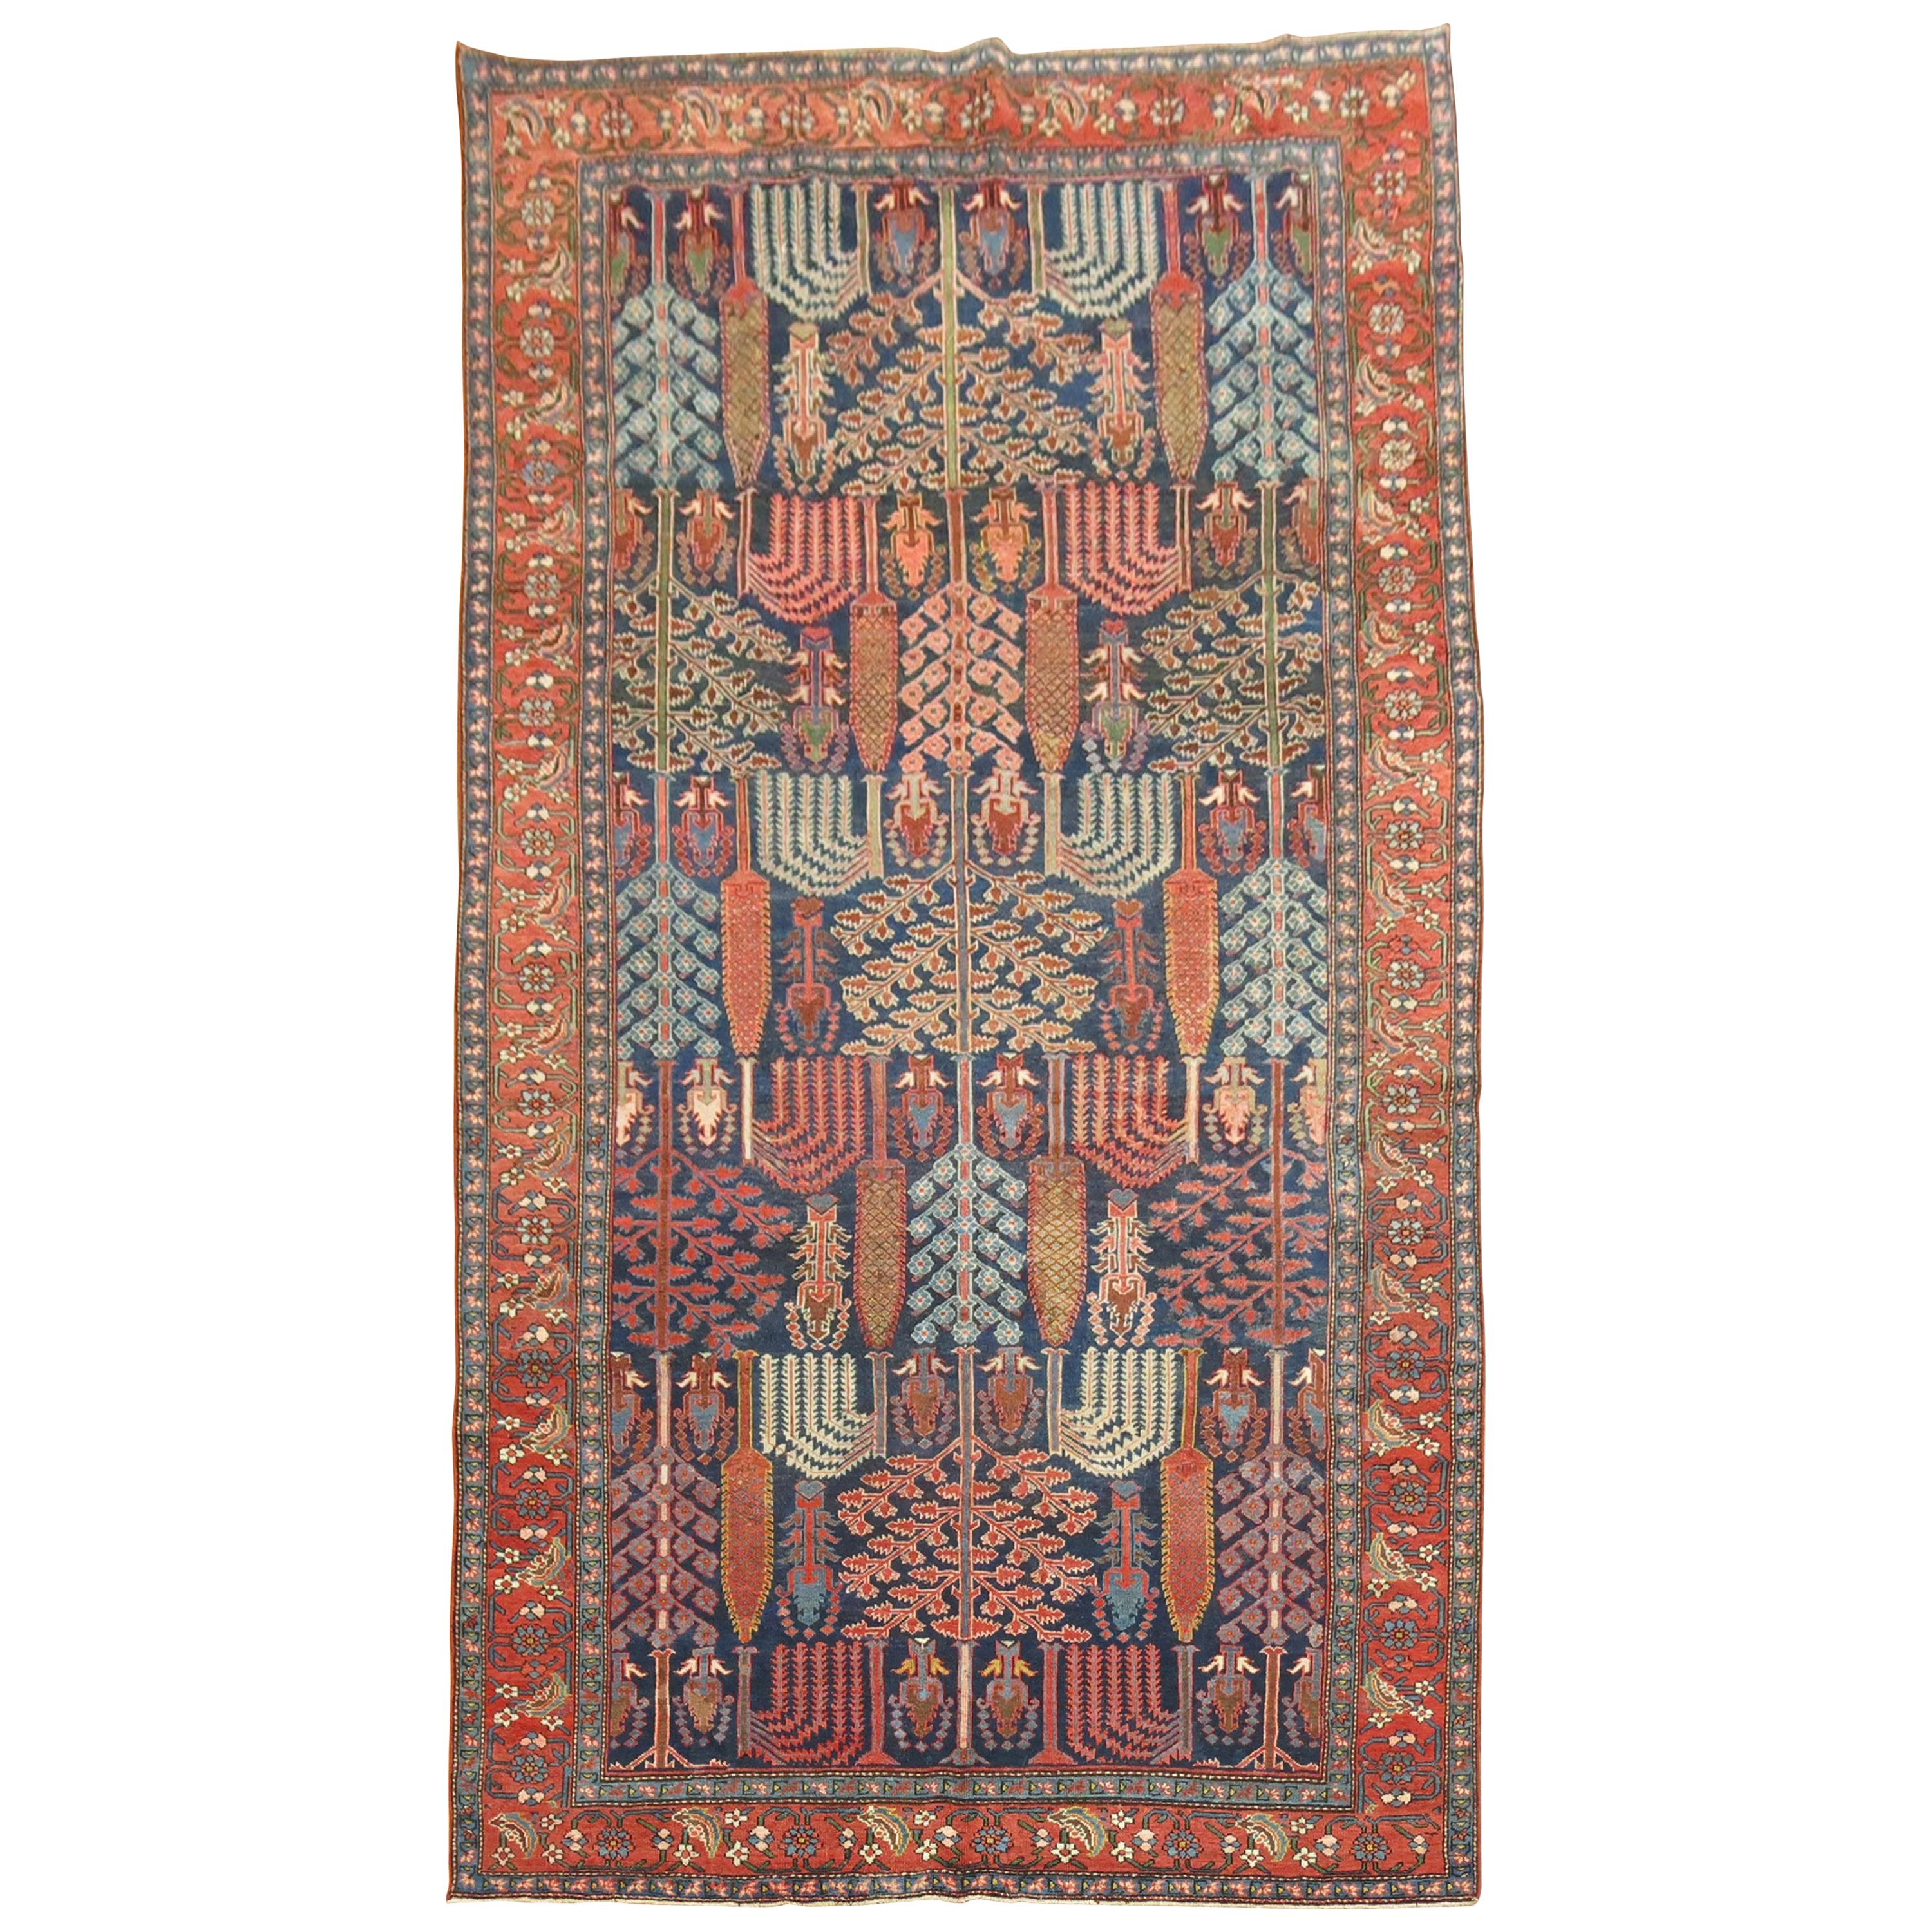 Antiker persischer Malayer-Teppich aus Weidenbaumholz